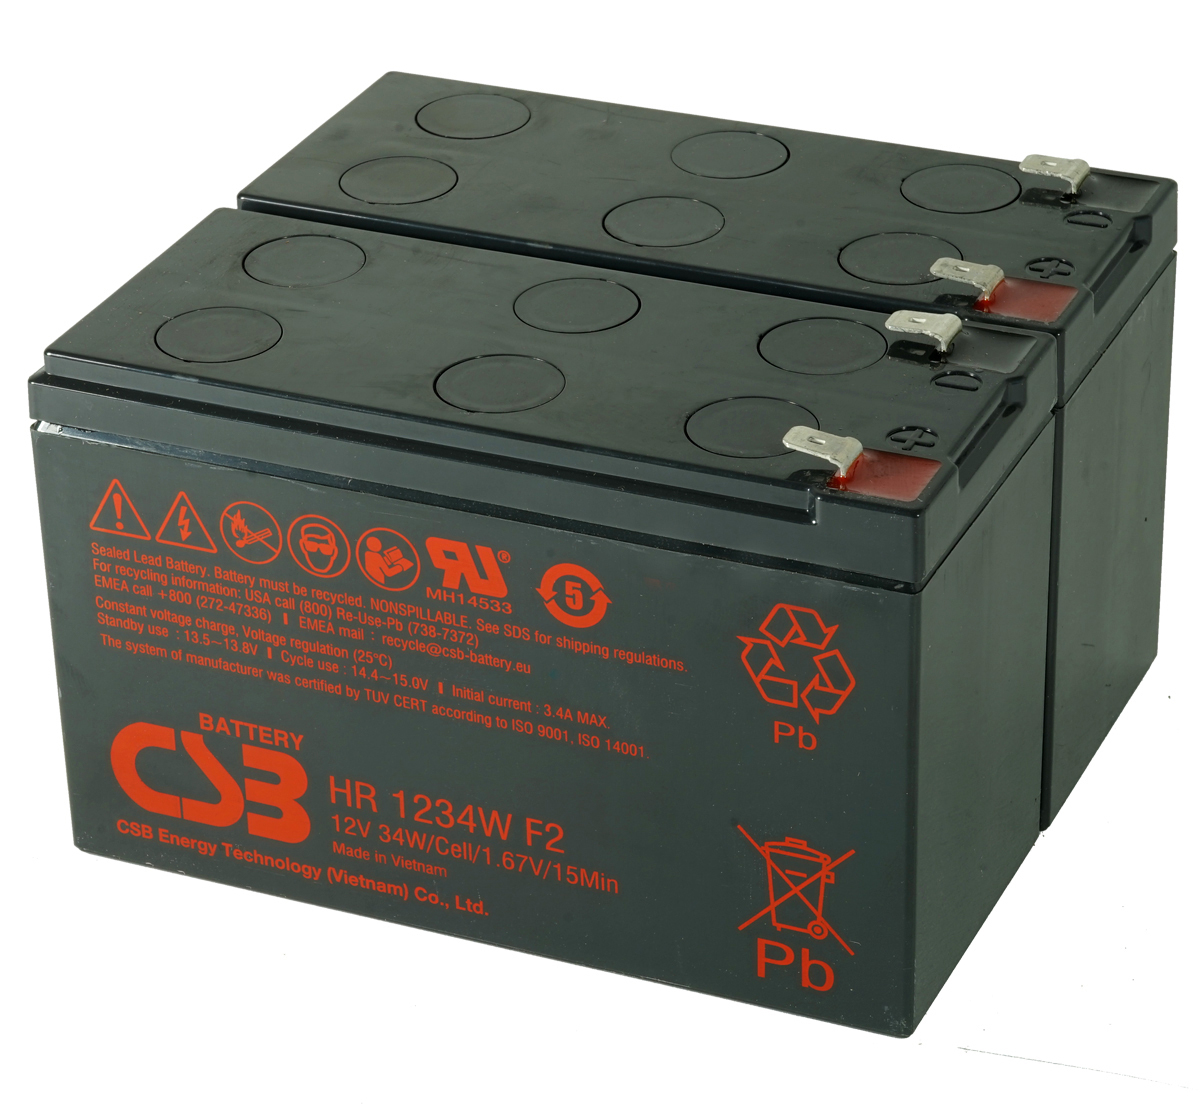 Tripp Lite RBC1500 Compatible UPS Battery Kit TL-MDS1500